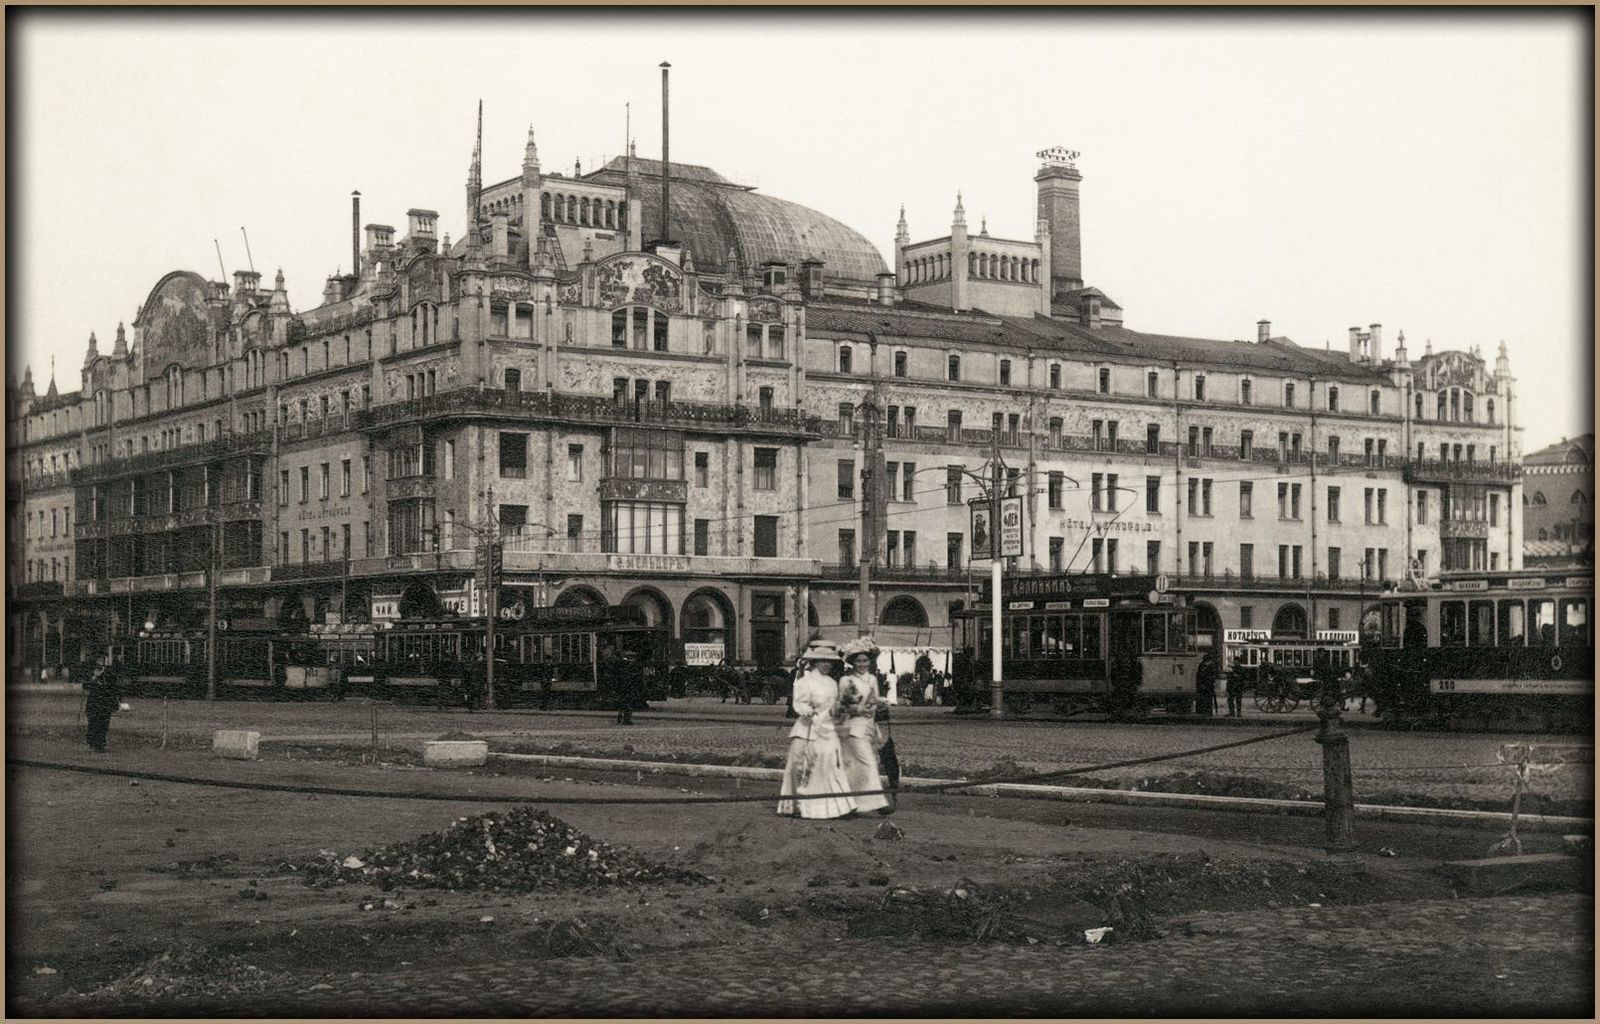 Williwam Walcot. Metropol Hotel. 1899-1903. A postcard